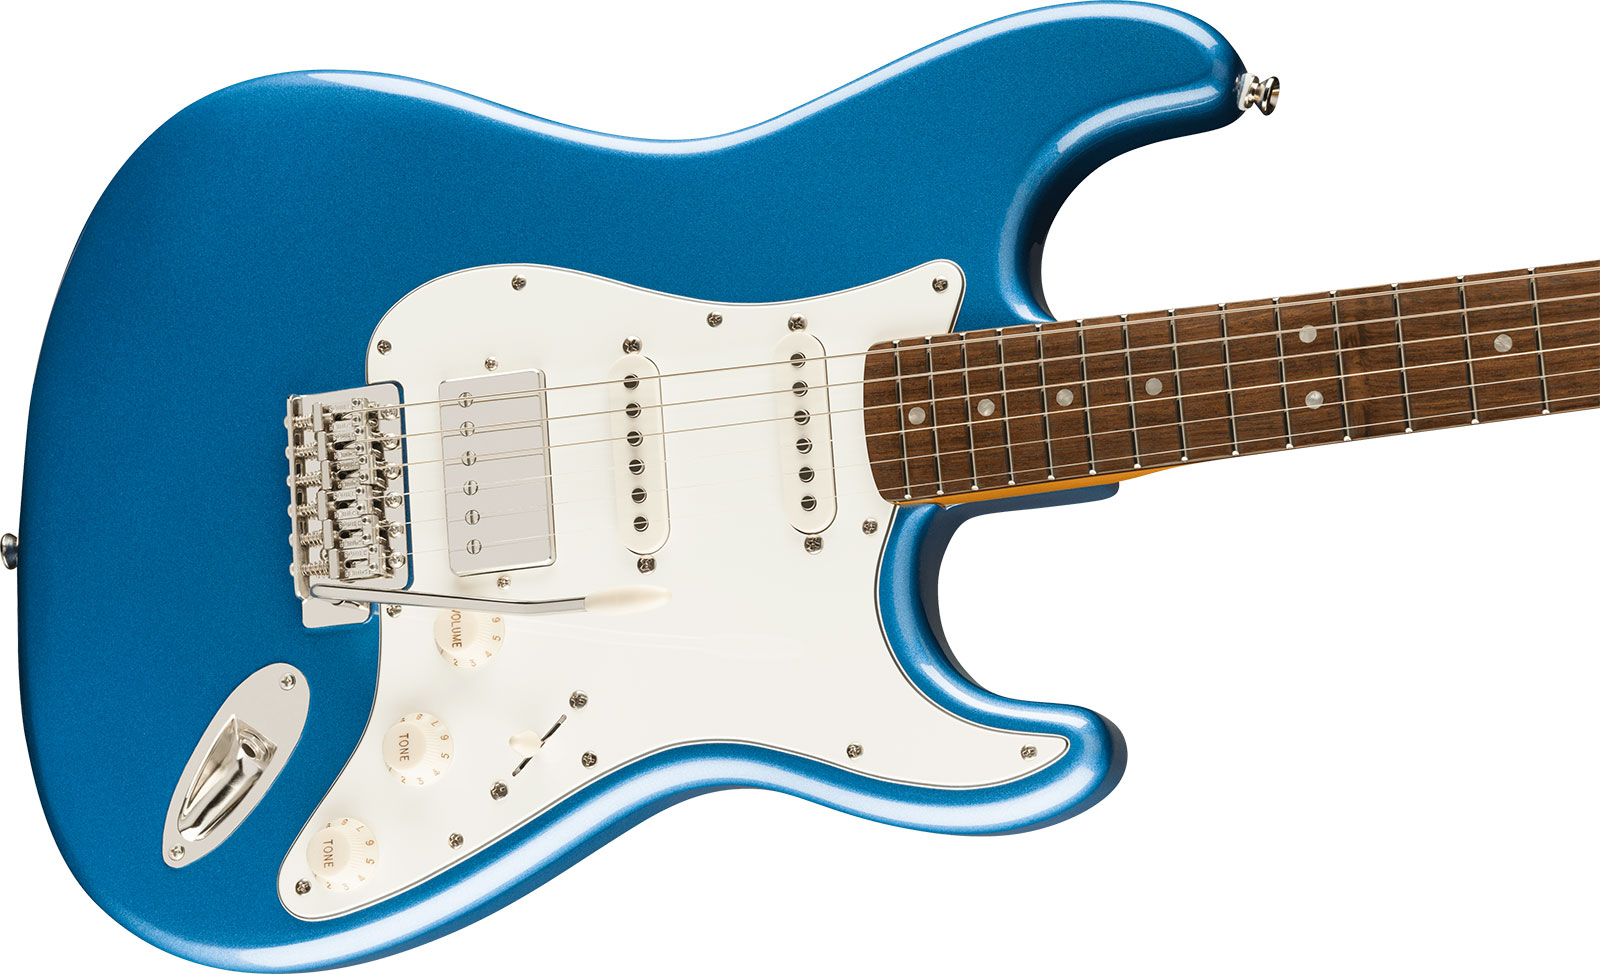 Squier Strat 60s Classic Vibe Ltd Hss Trem Lau - Lake Placid Blue - Retro rock electric guitar - Variation 2